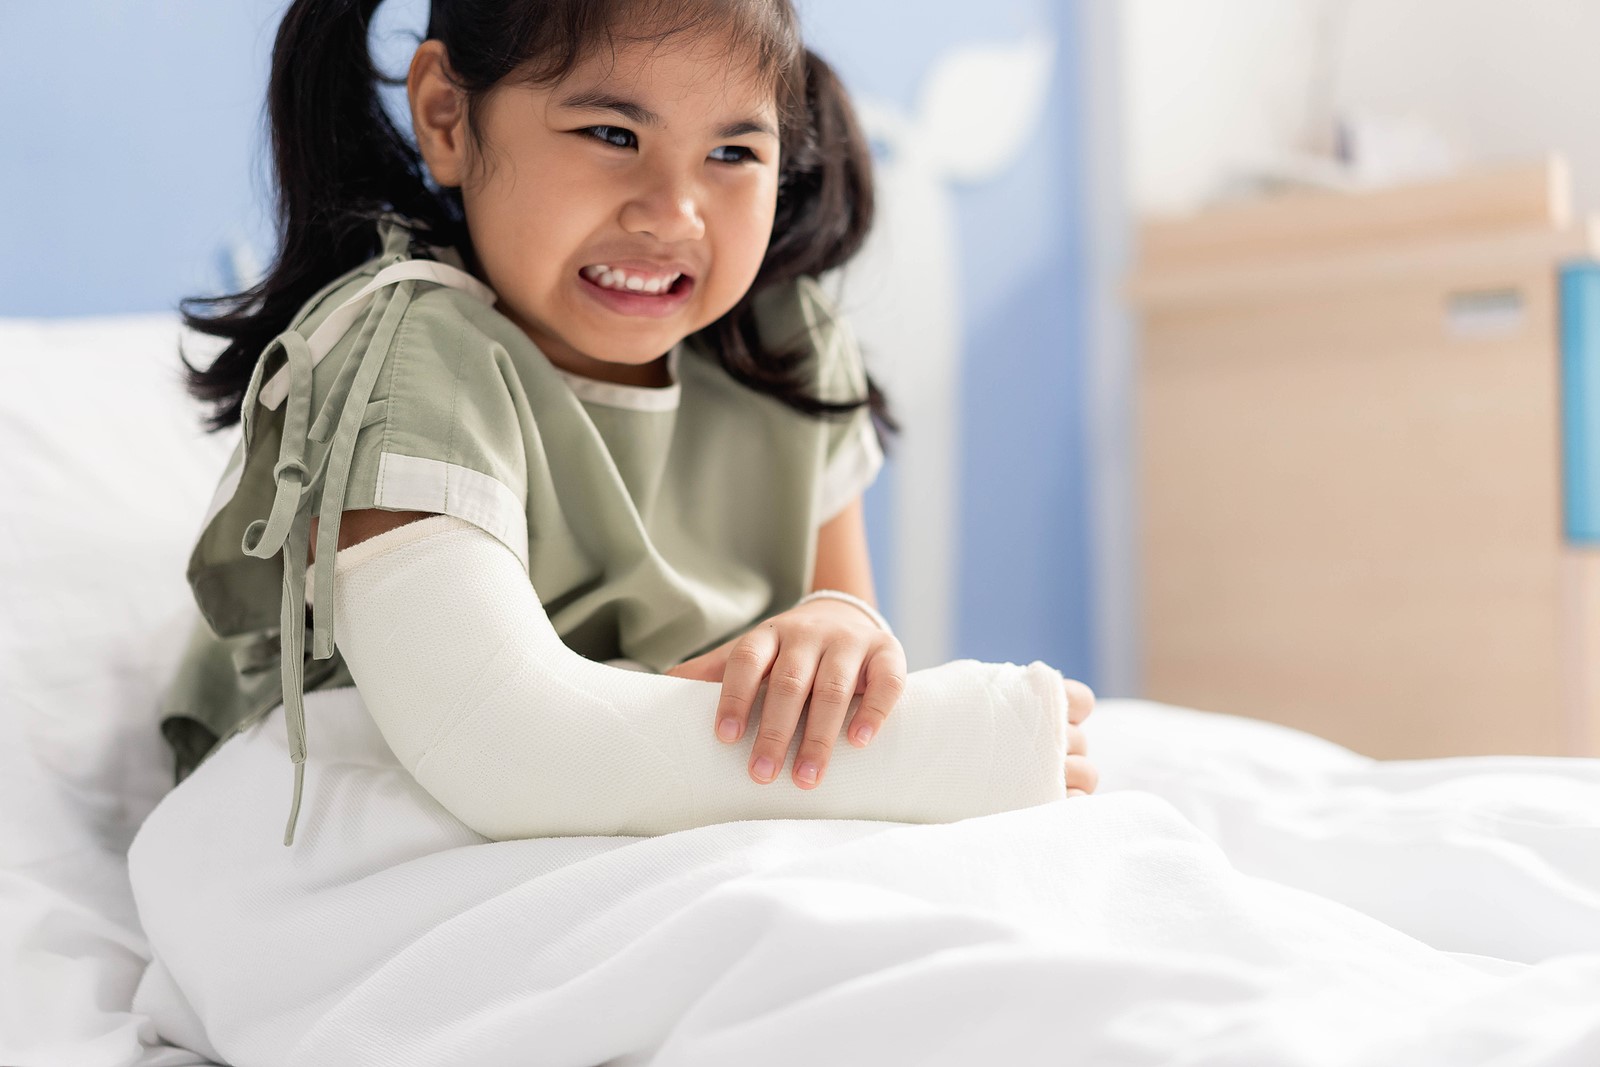 Signs Of a Broken Bone in Children